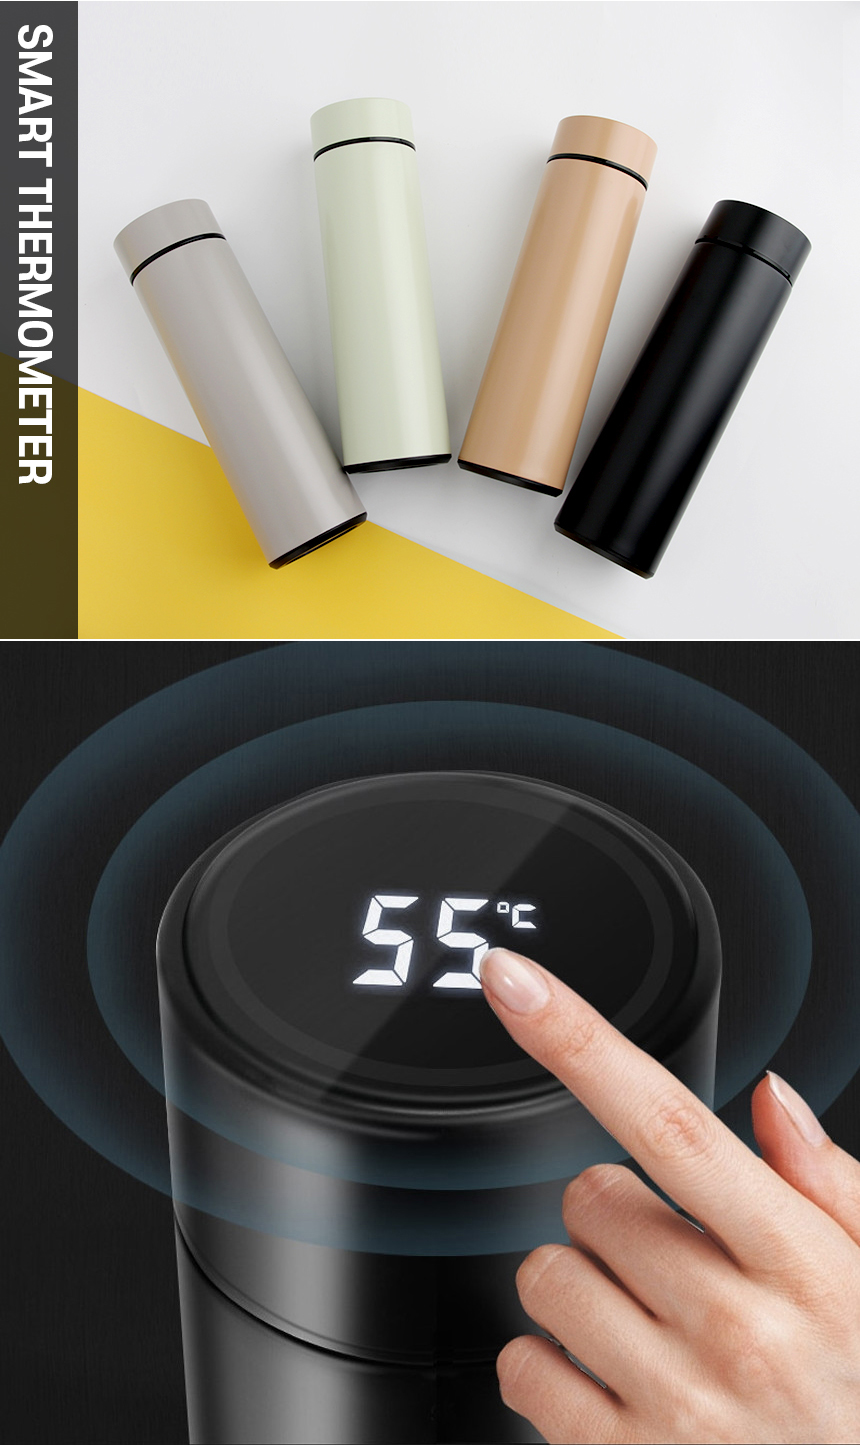 Smart-Thermometer_06.jpg